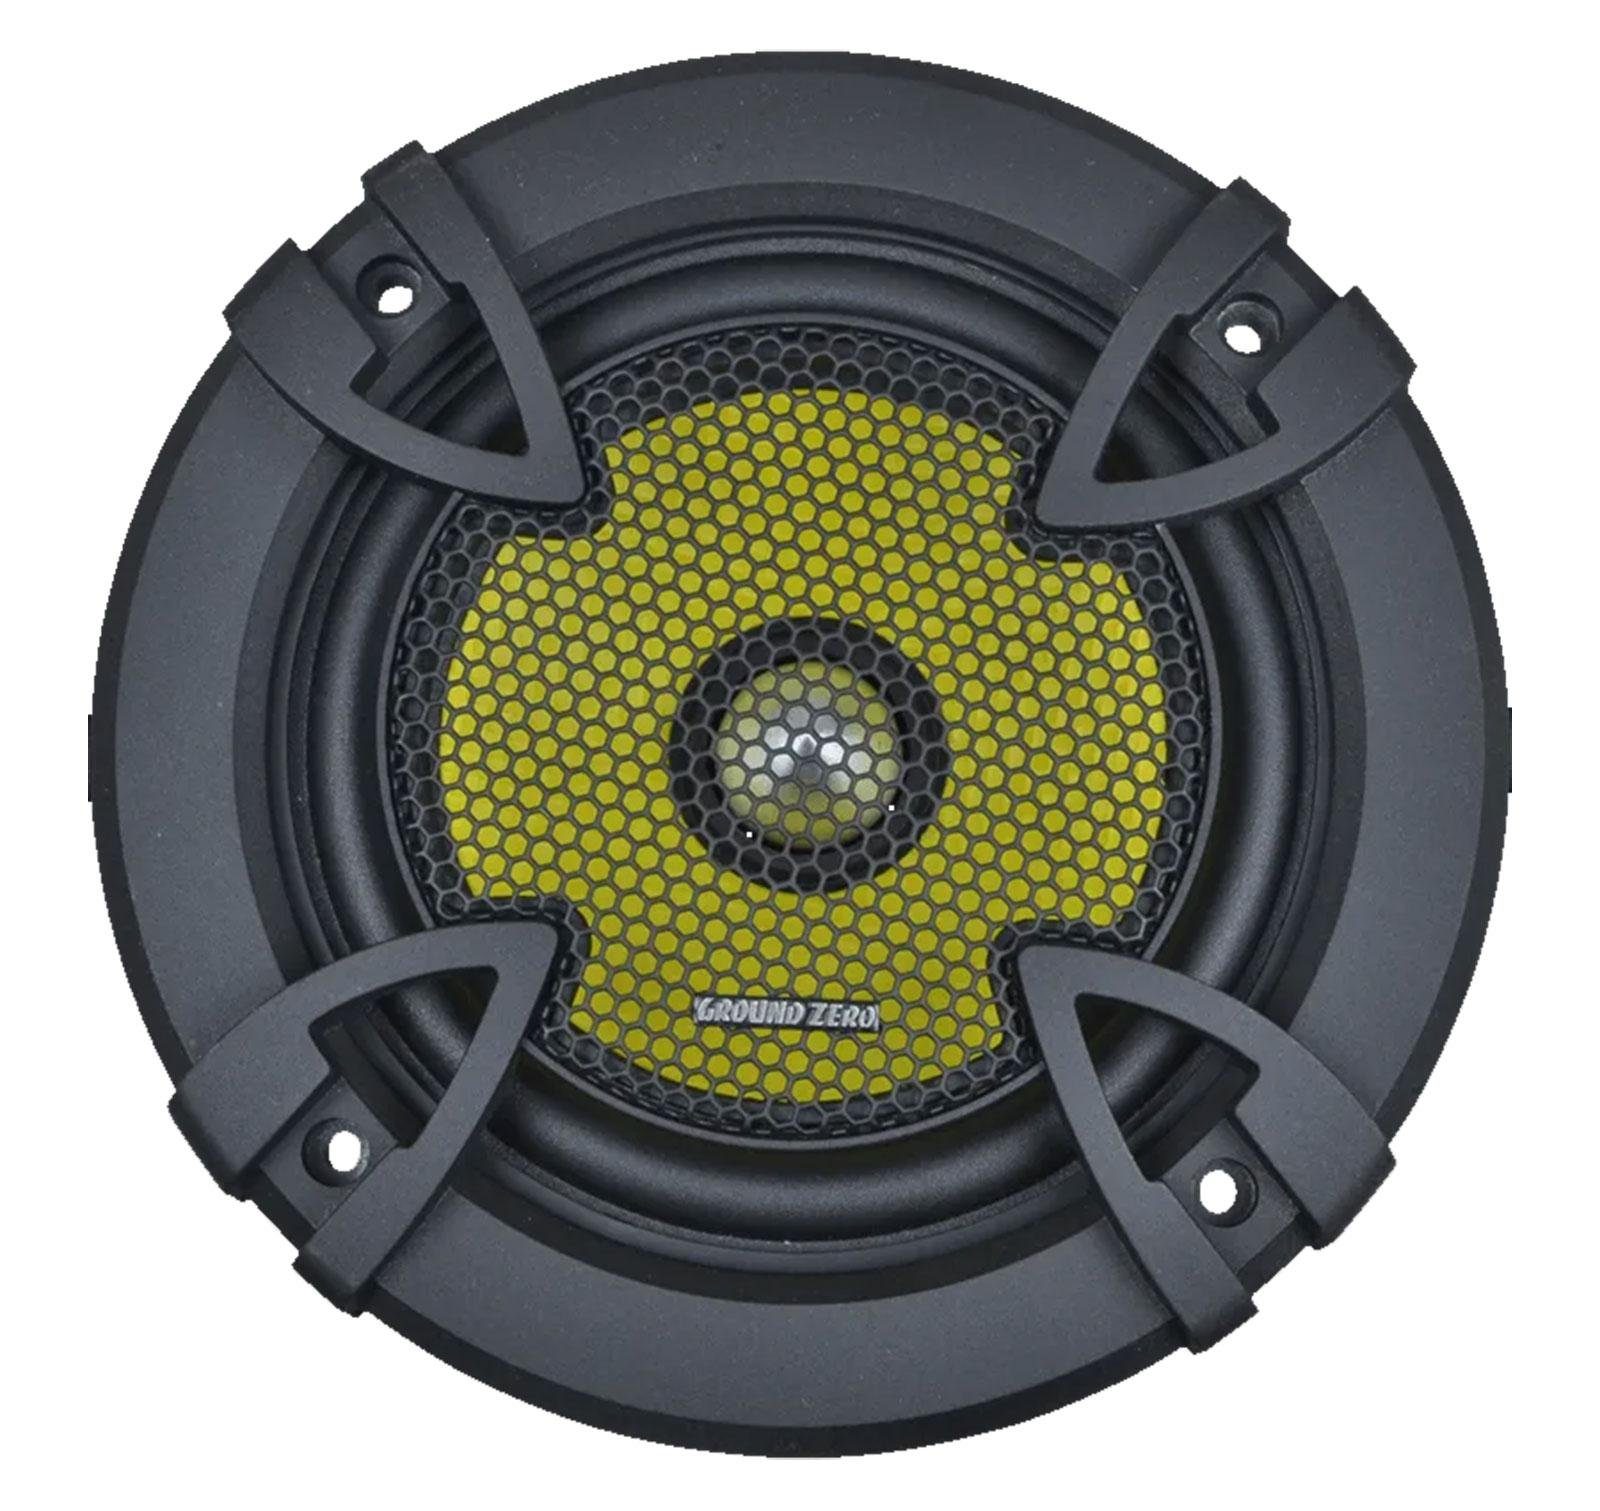 13 cm 130.2X Komponenten-System Zero Ground GZTC 2-Wege Auto-Lautsprecher